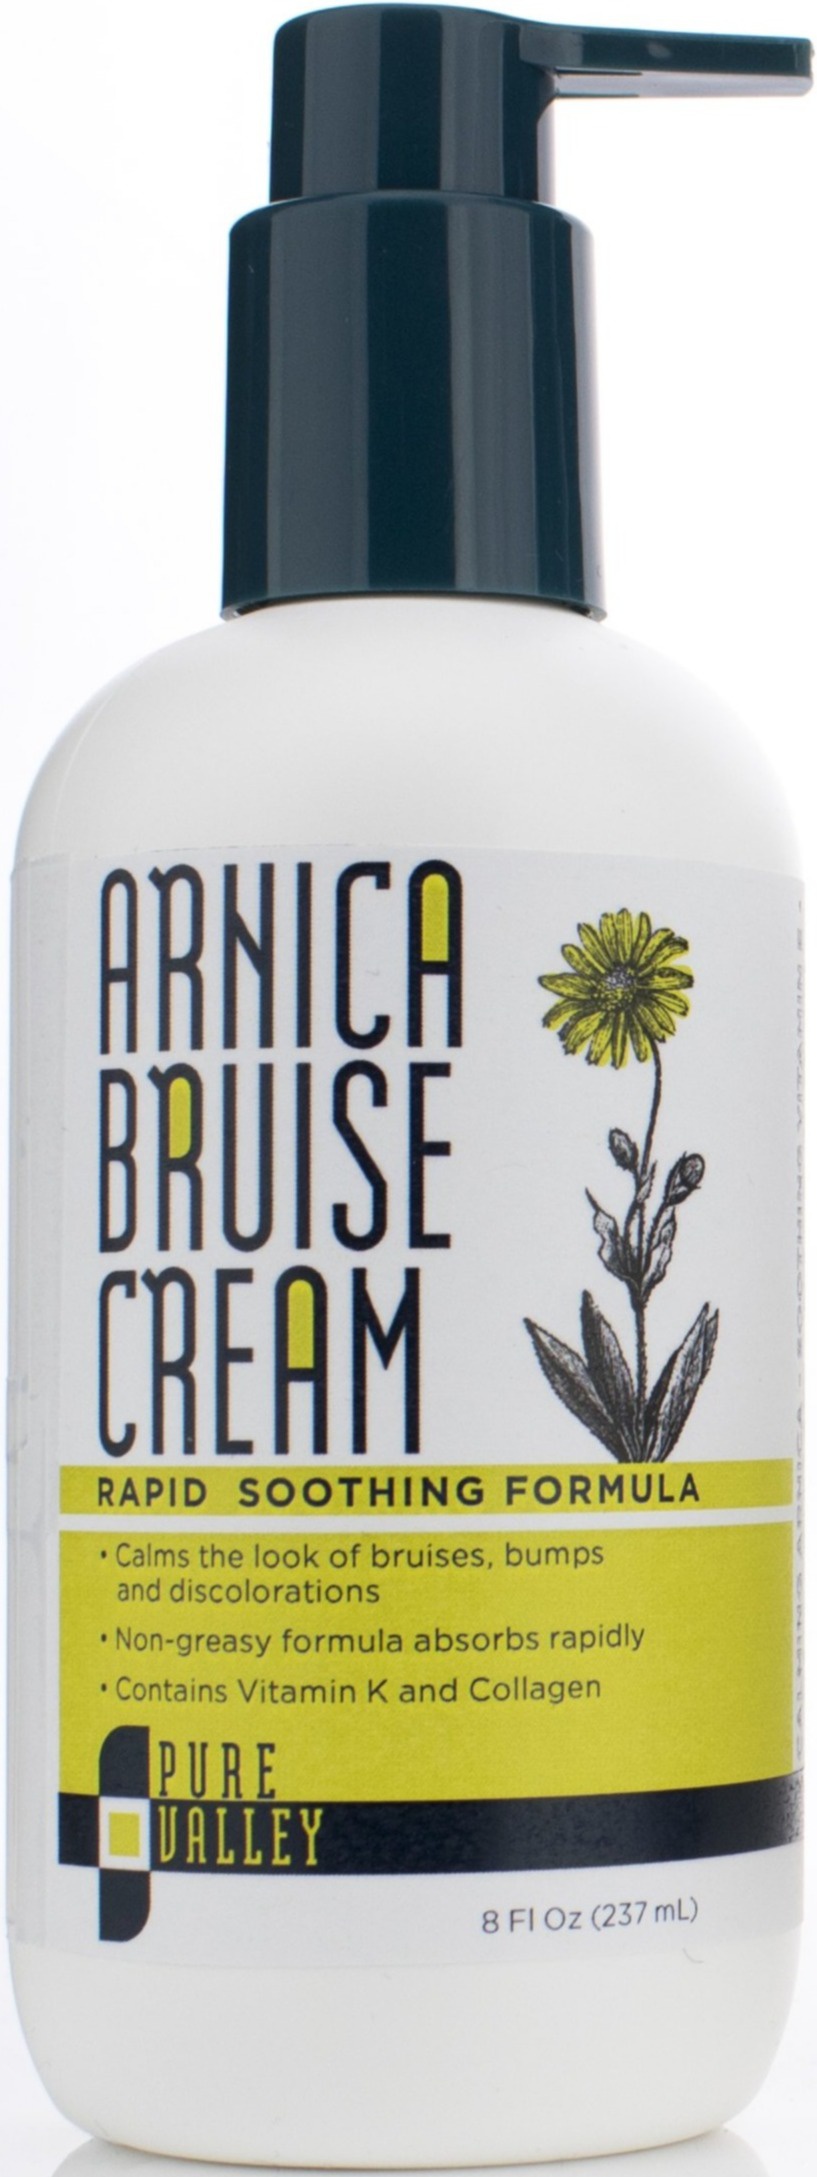 Pure valley Arnica Bruise Cream